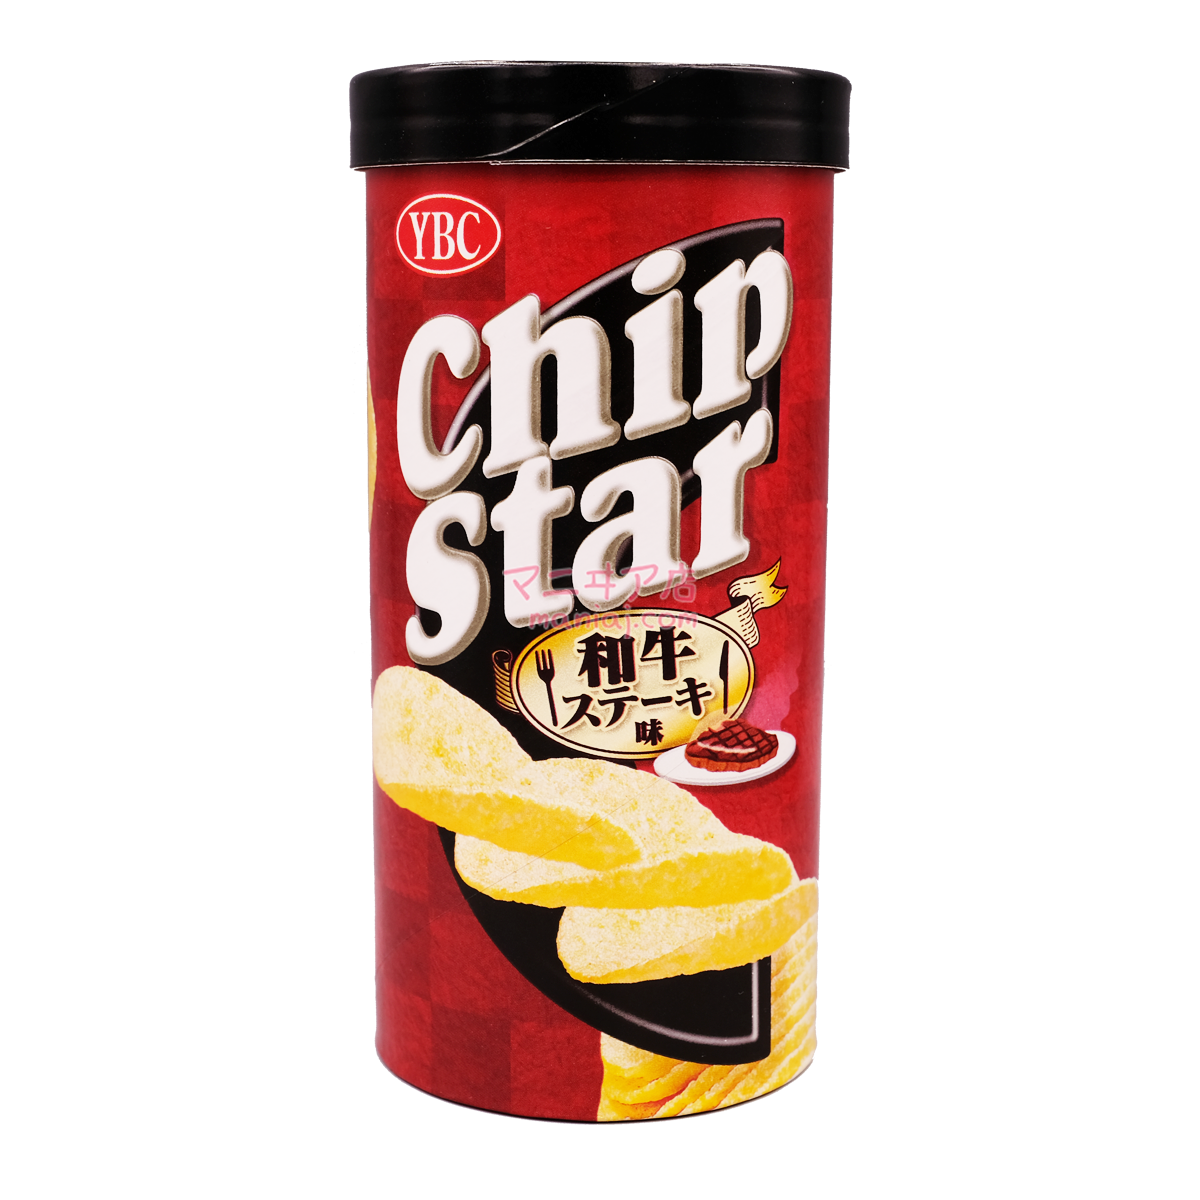 Chip Star 和牛牛扒味薯片